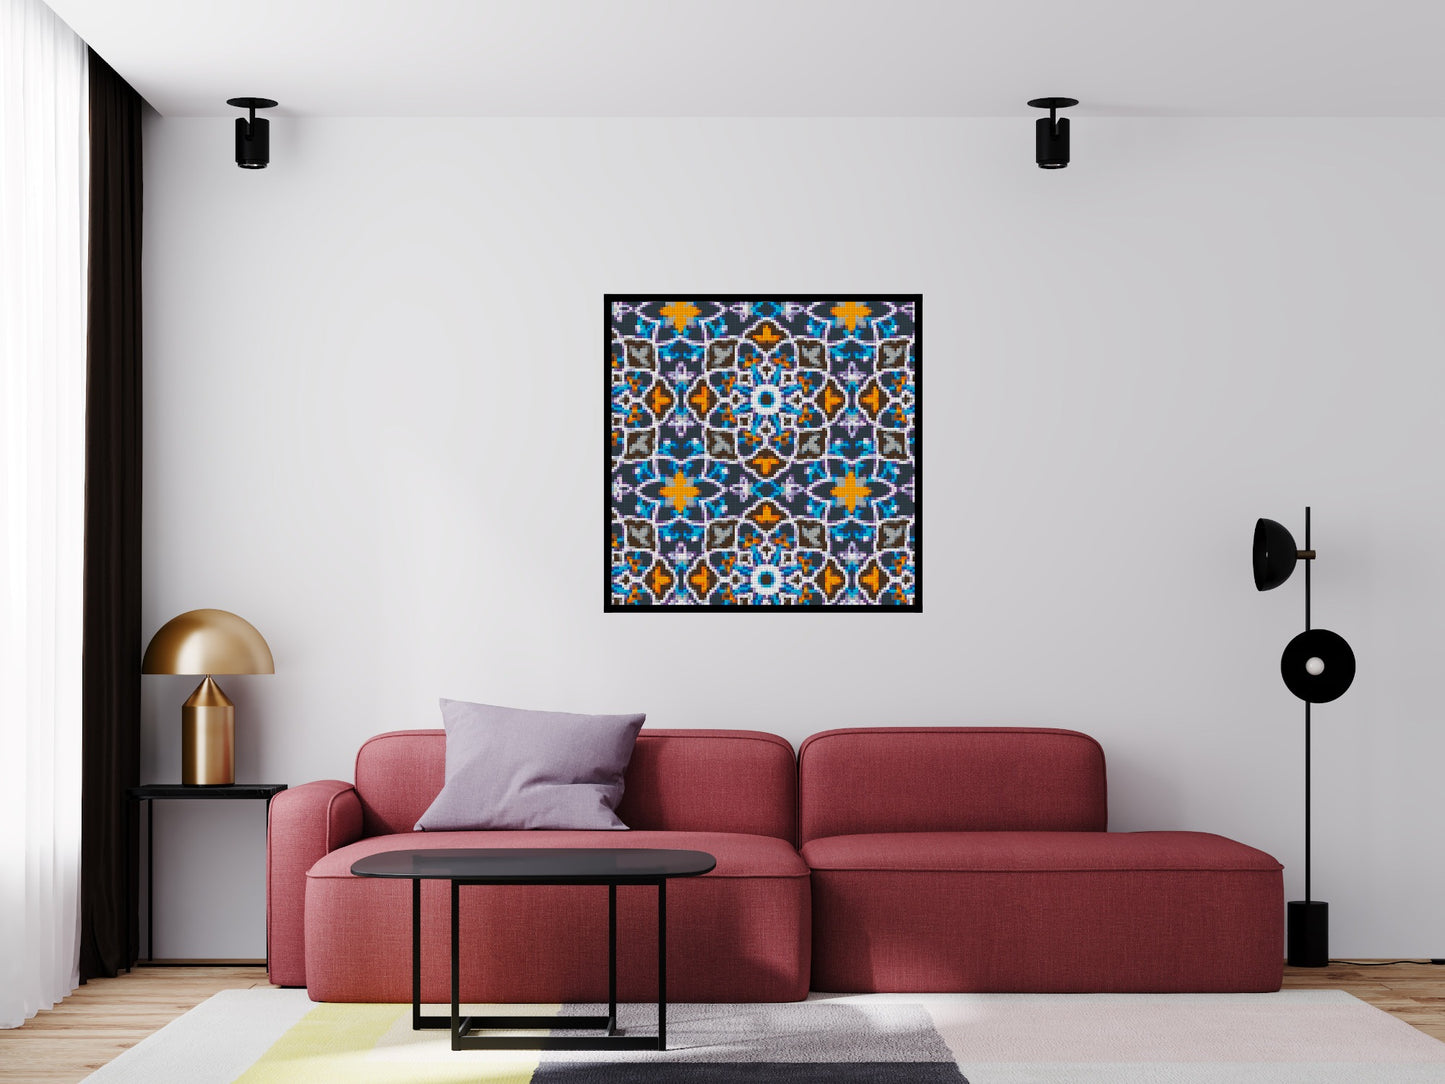 Abstract Pattern #1 - Brick Art Mosaic Kit